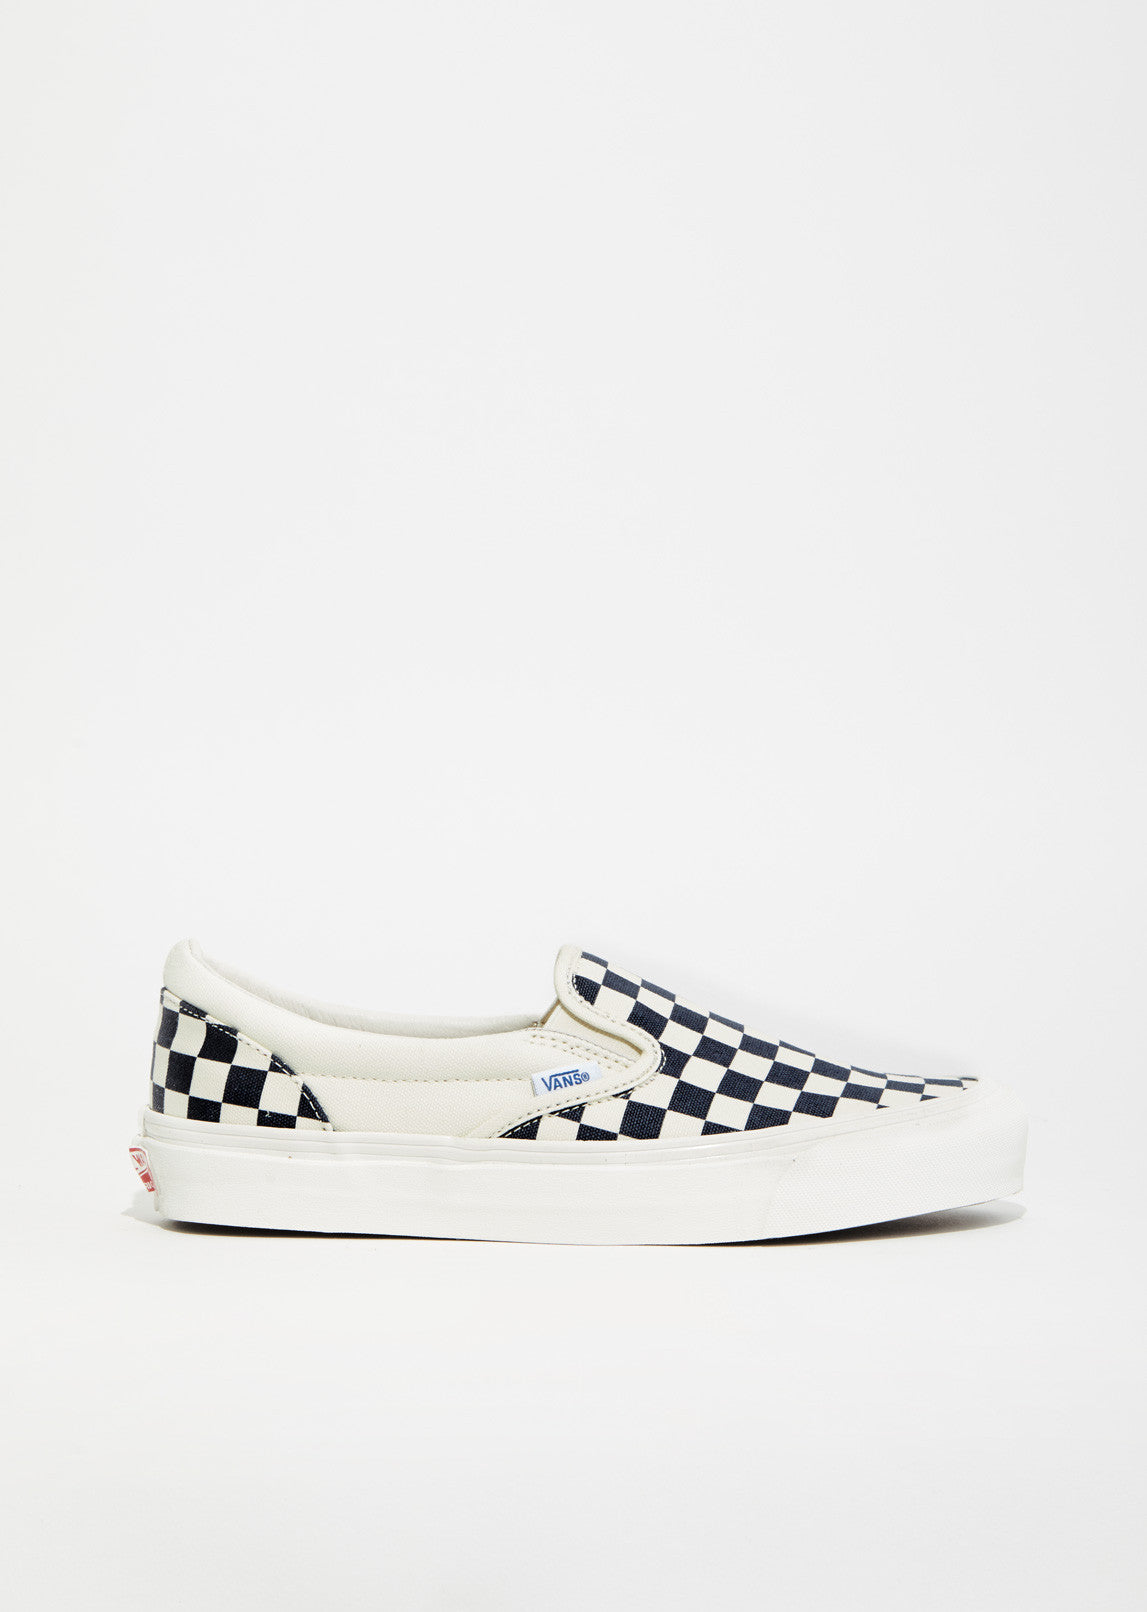 OG Classic Checkerboard Slip-On Sneakers by Vans- La Garçonne